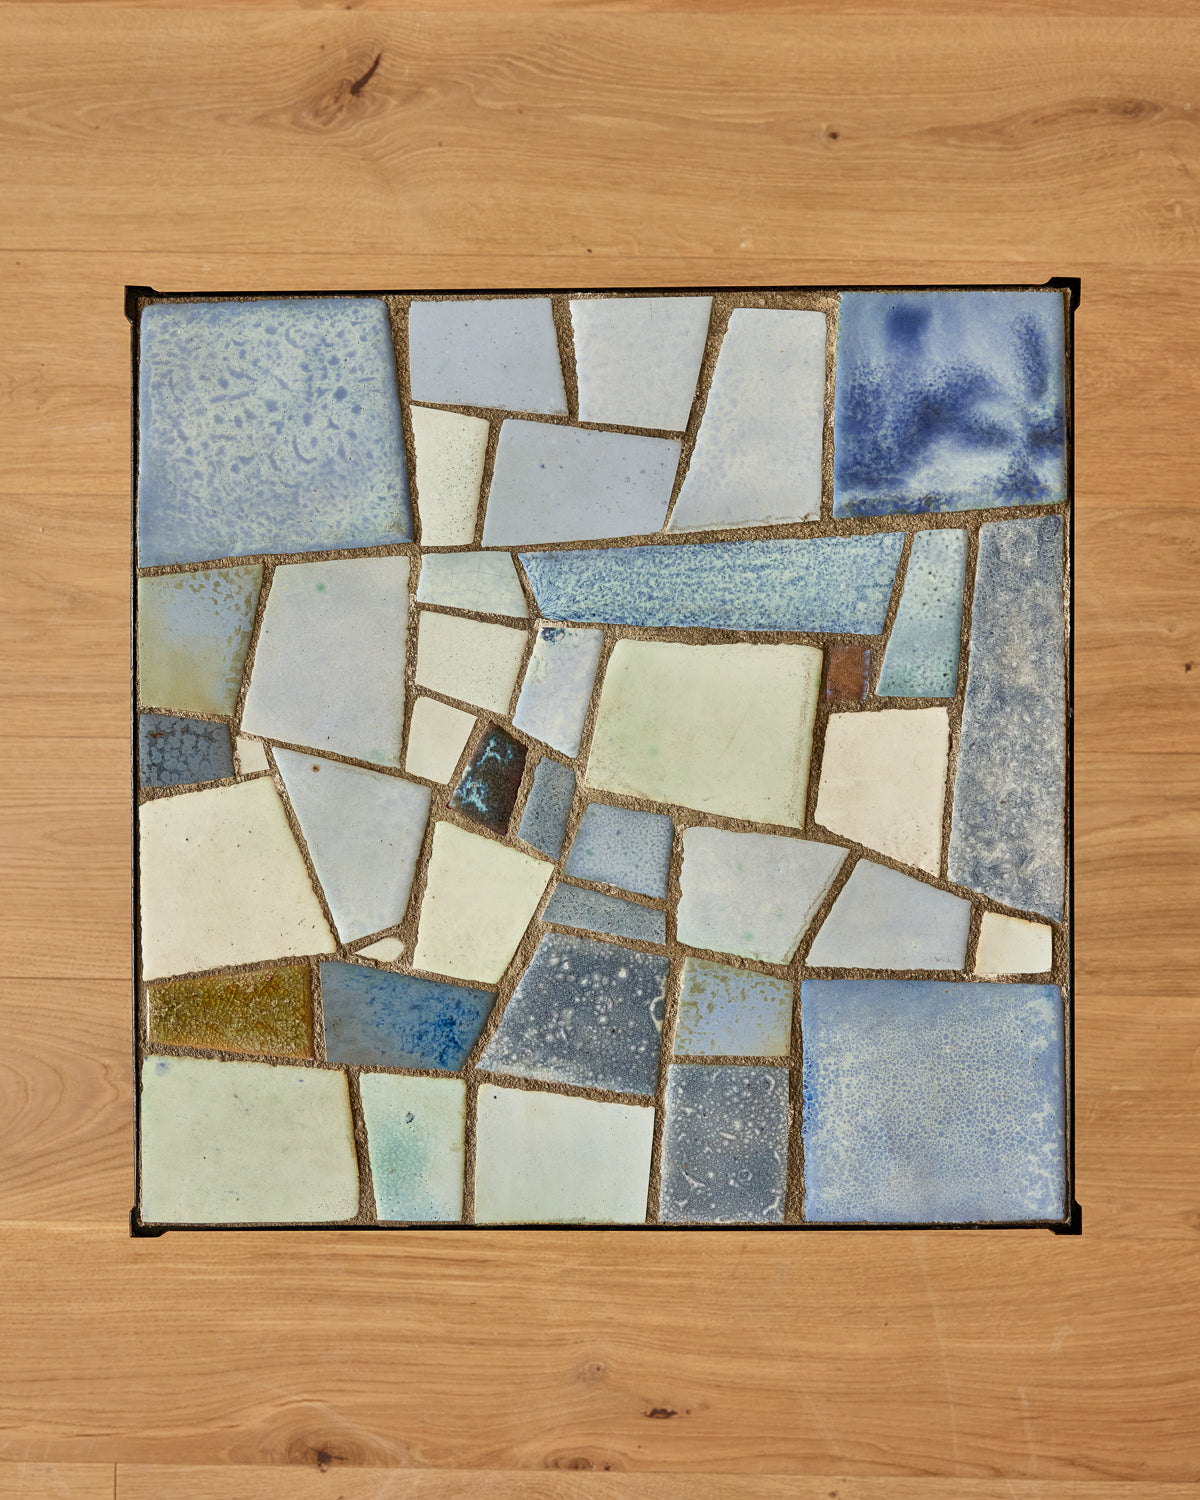 Mosaic Blue Coffee Table